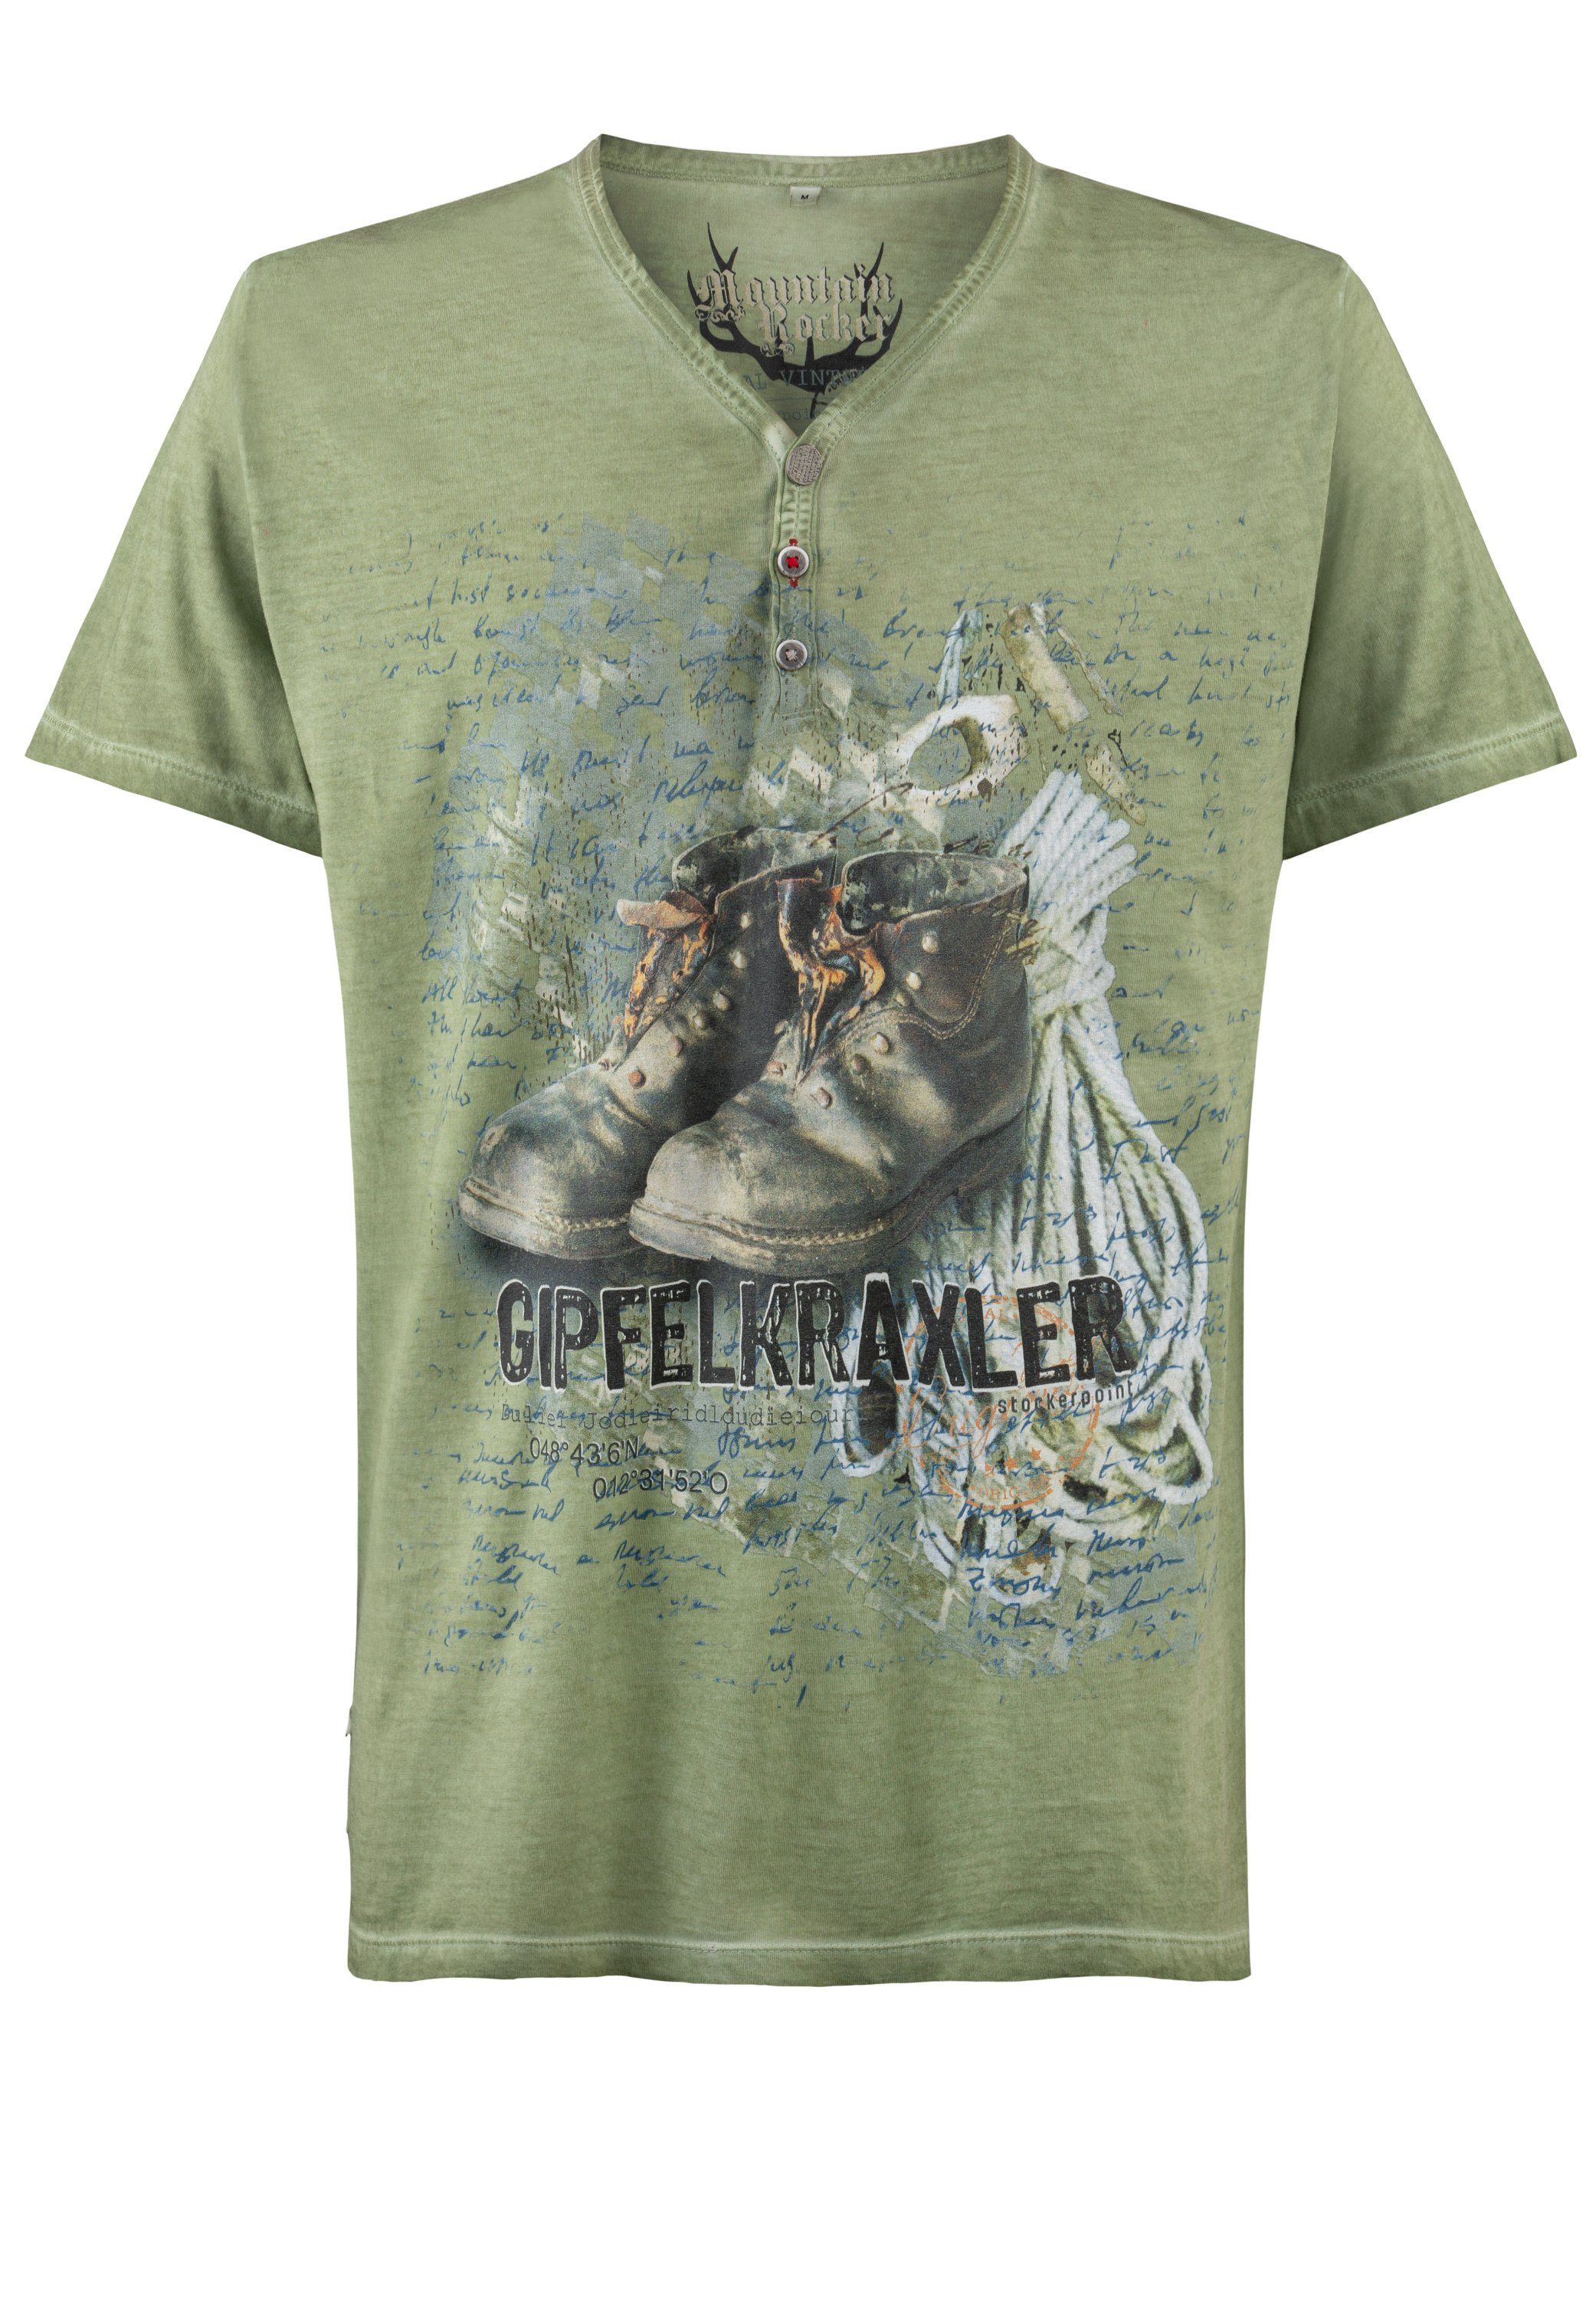 Gipfelkraxler T-Shirt Stockerpoint grün